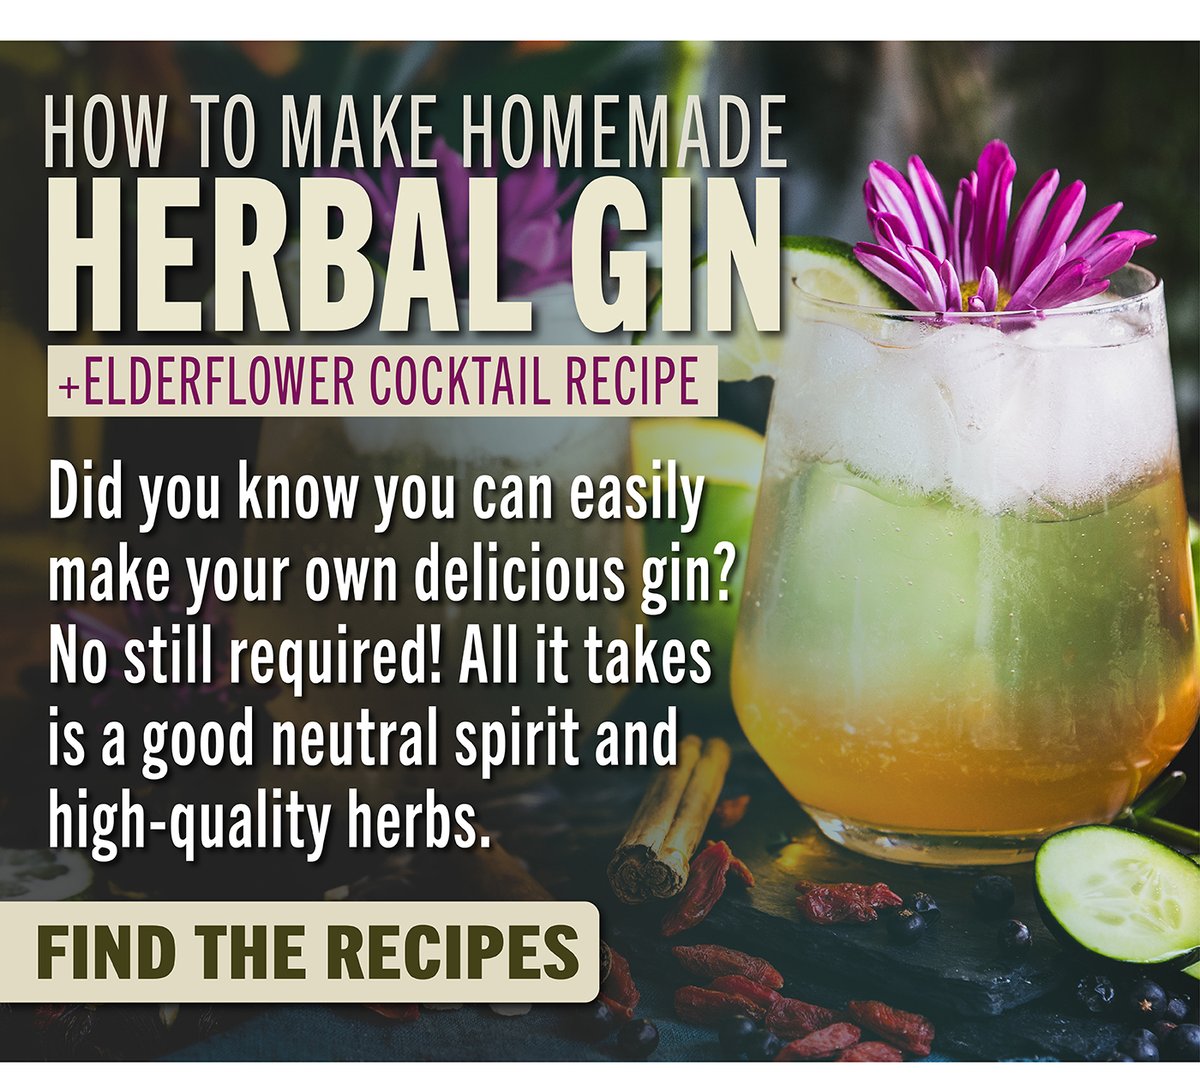 How to Make Homemade Herbal Gin